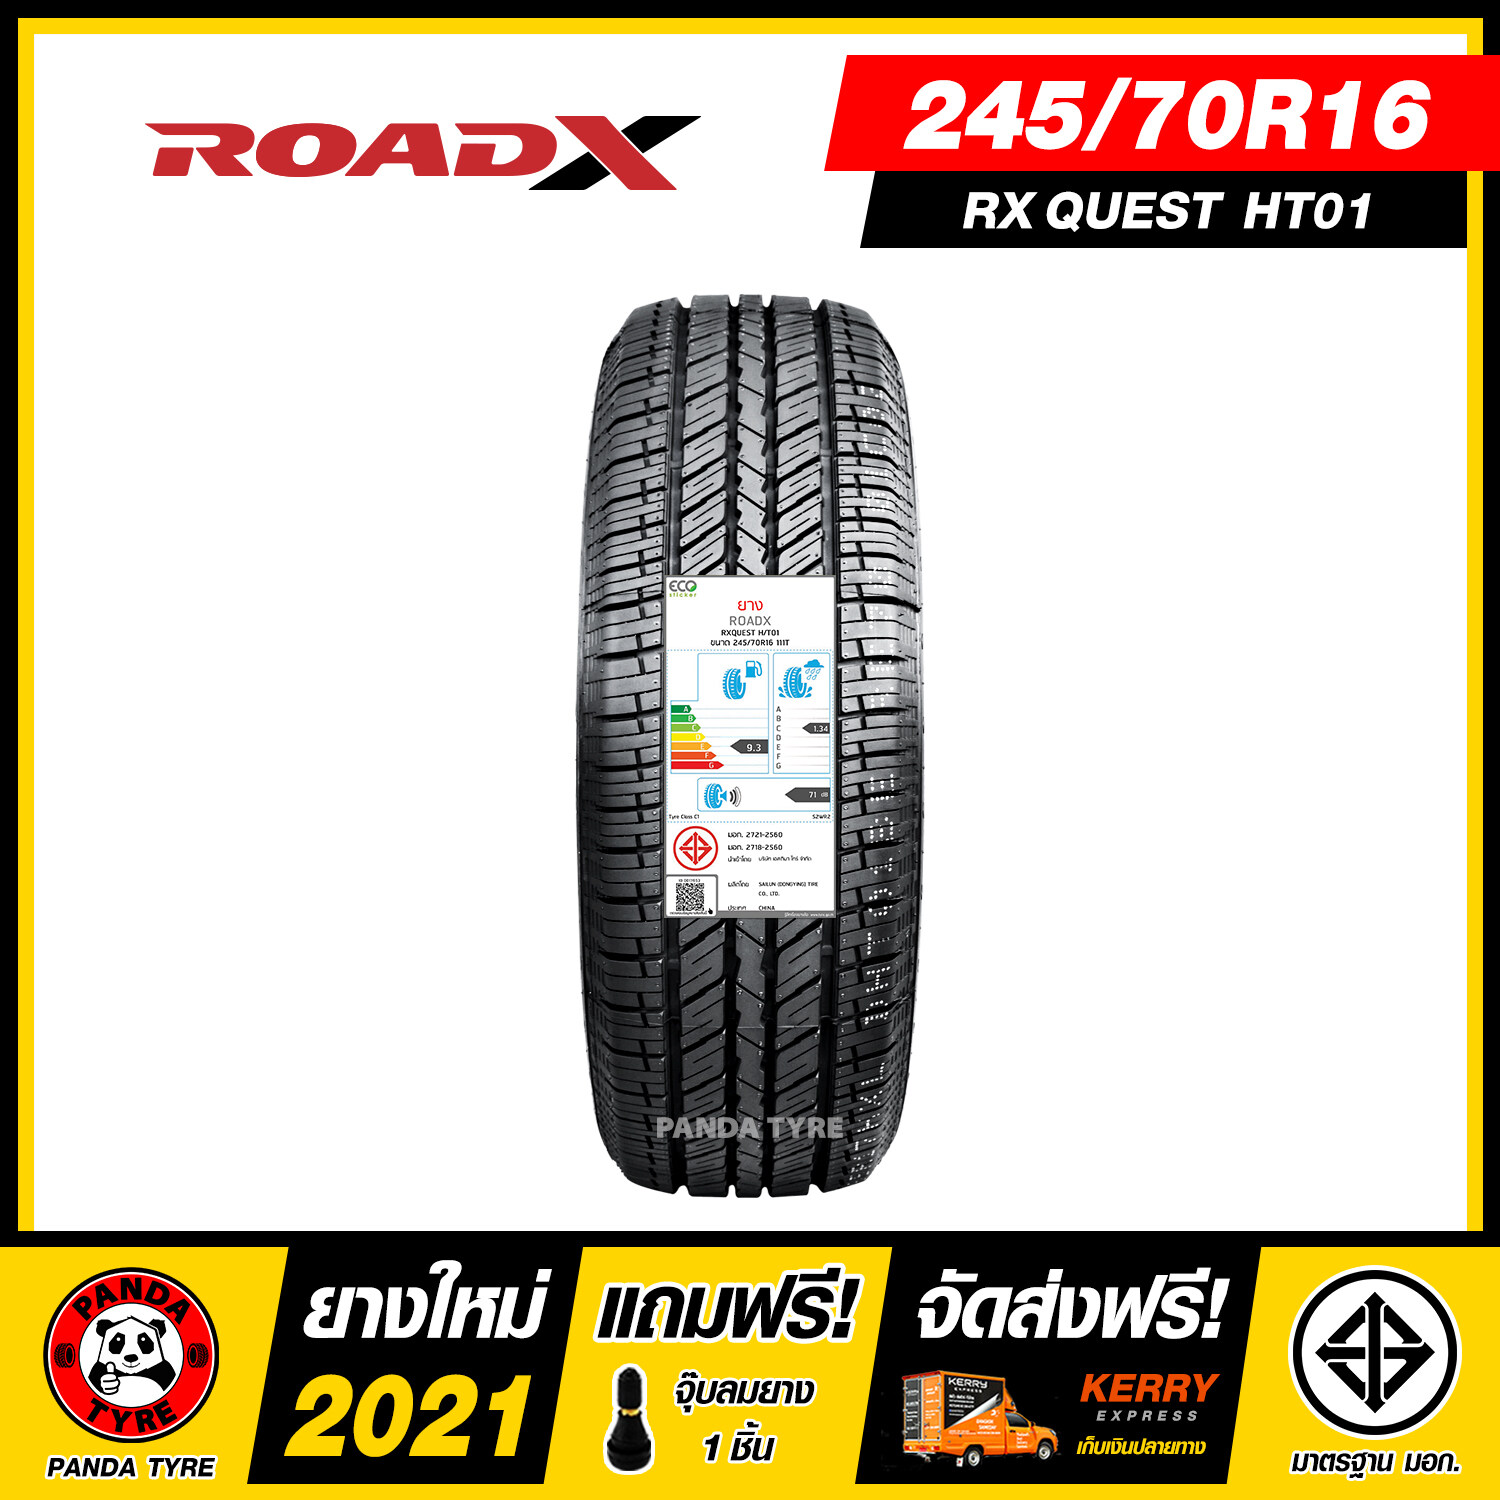 ROADX 245/70R16 ยางรถยนต์ขอบ16 รุ่น RXQUEST HT01 - 1 เส้น (ยางใหม่ผลิตปี 2021)